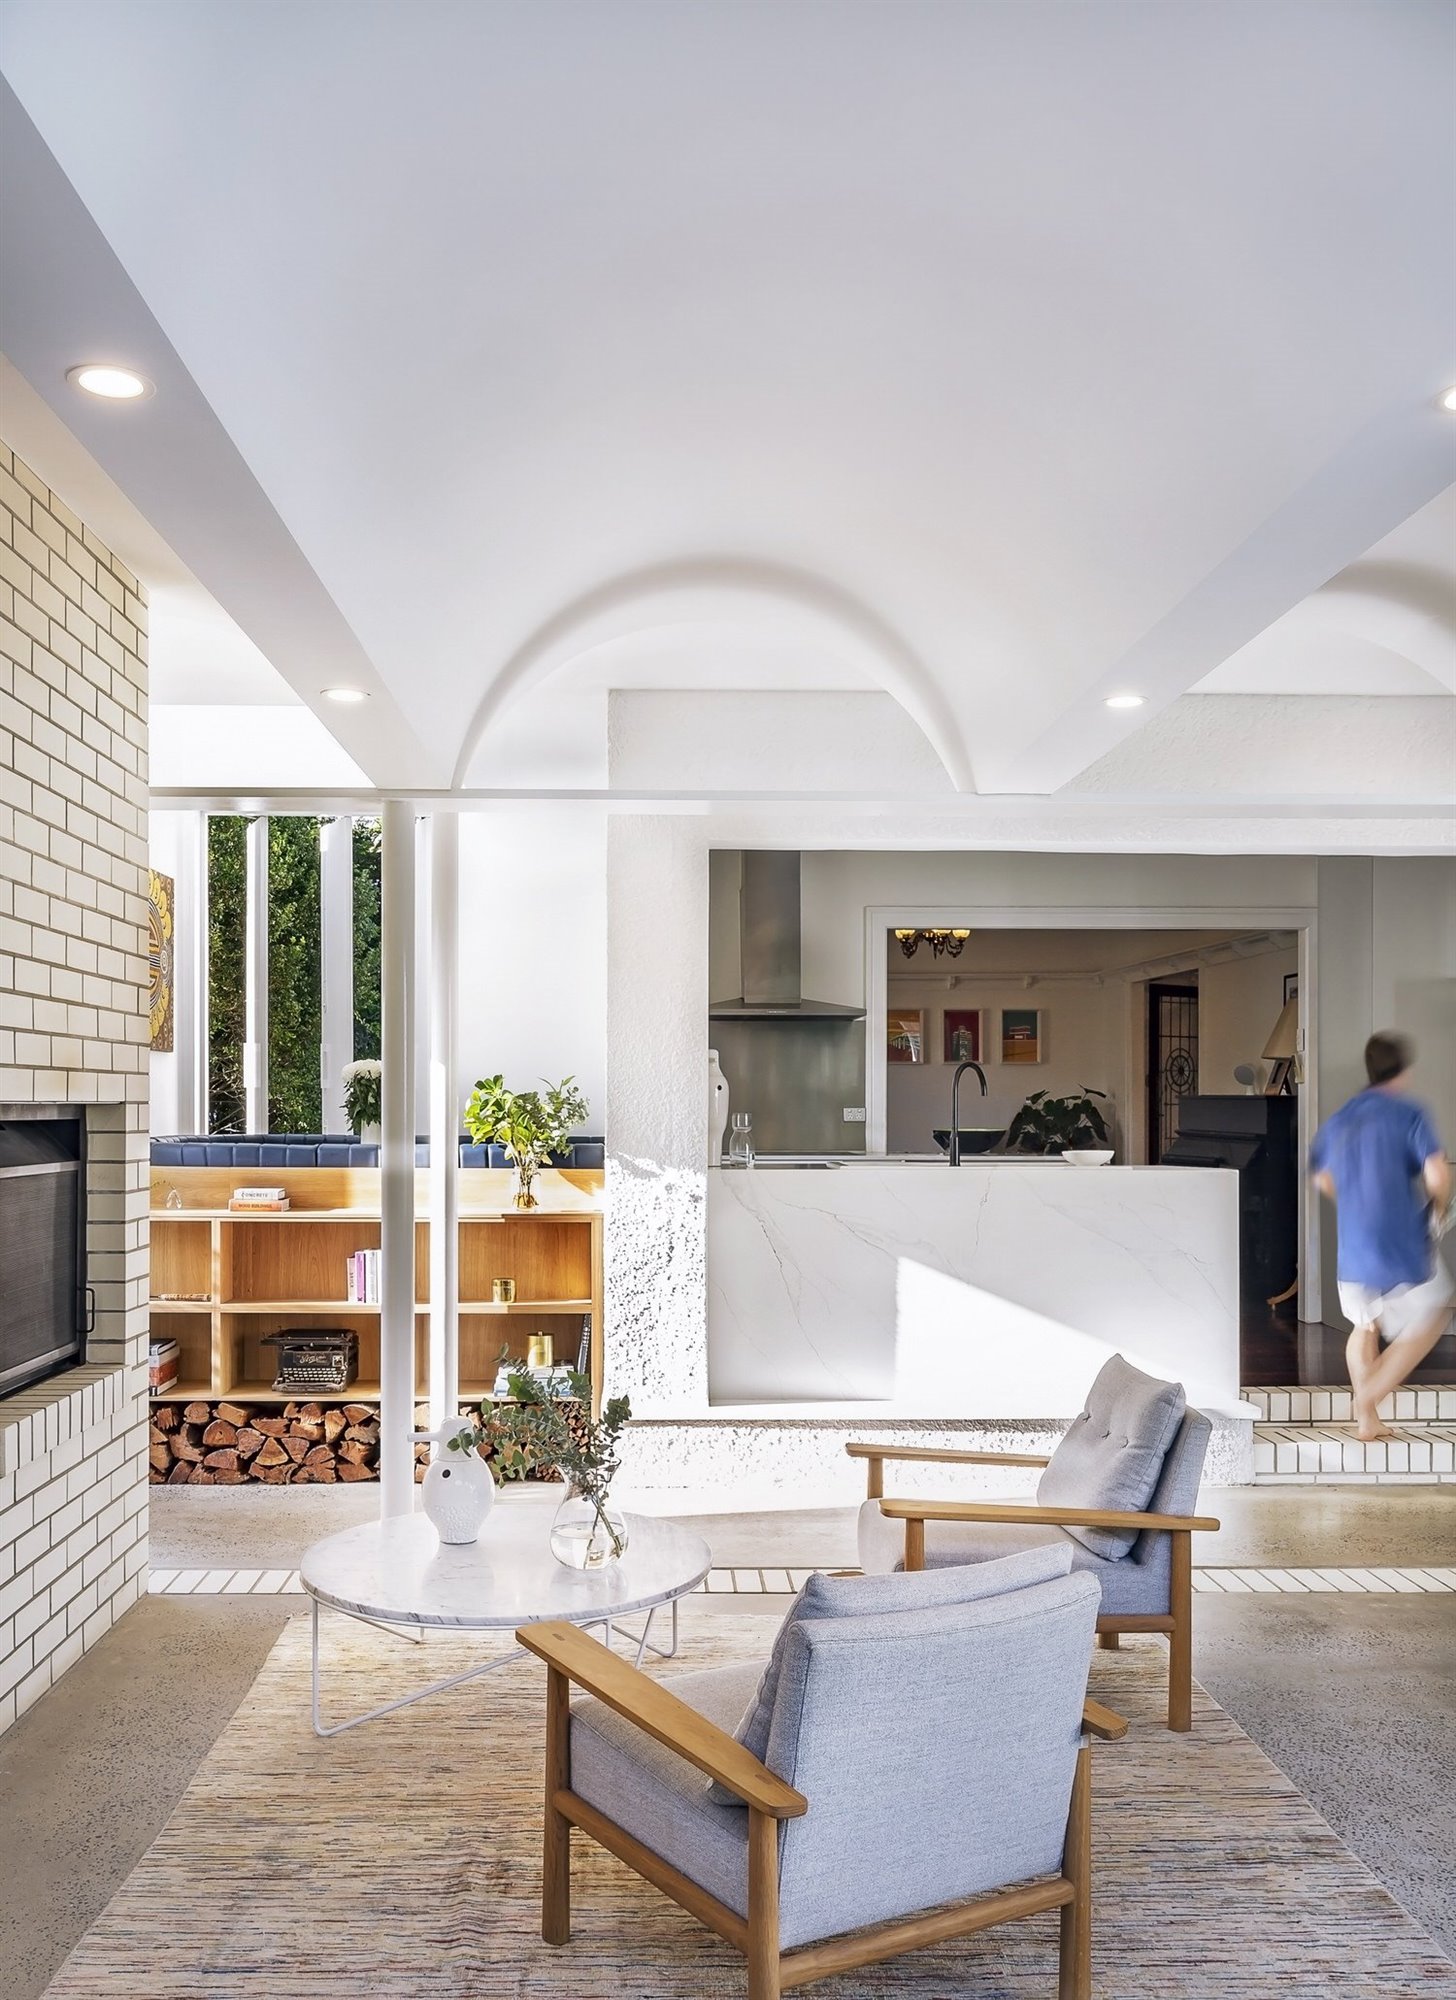 Casa de verano con piscina en Brisbane con fachada blanca salon con chimenea